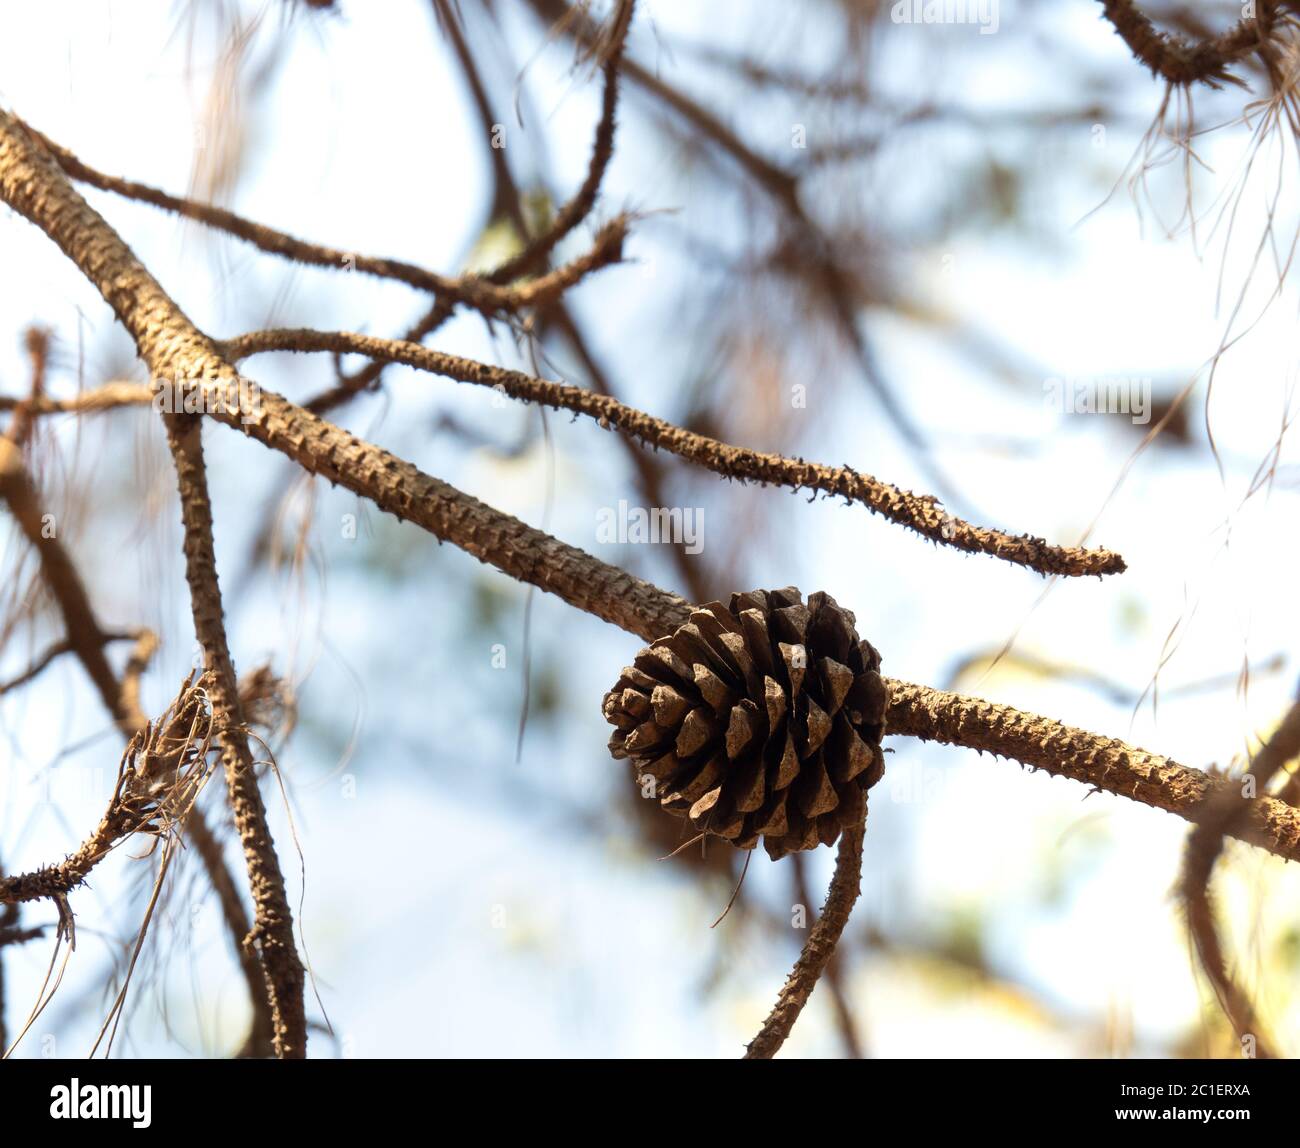 Female Cone of Pinus kesiya or Khasi pine with branch, on tree. Daytime, sky background. Stock Photo